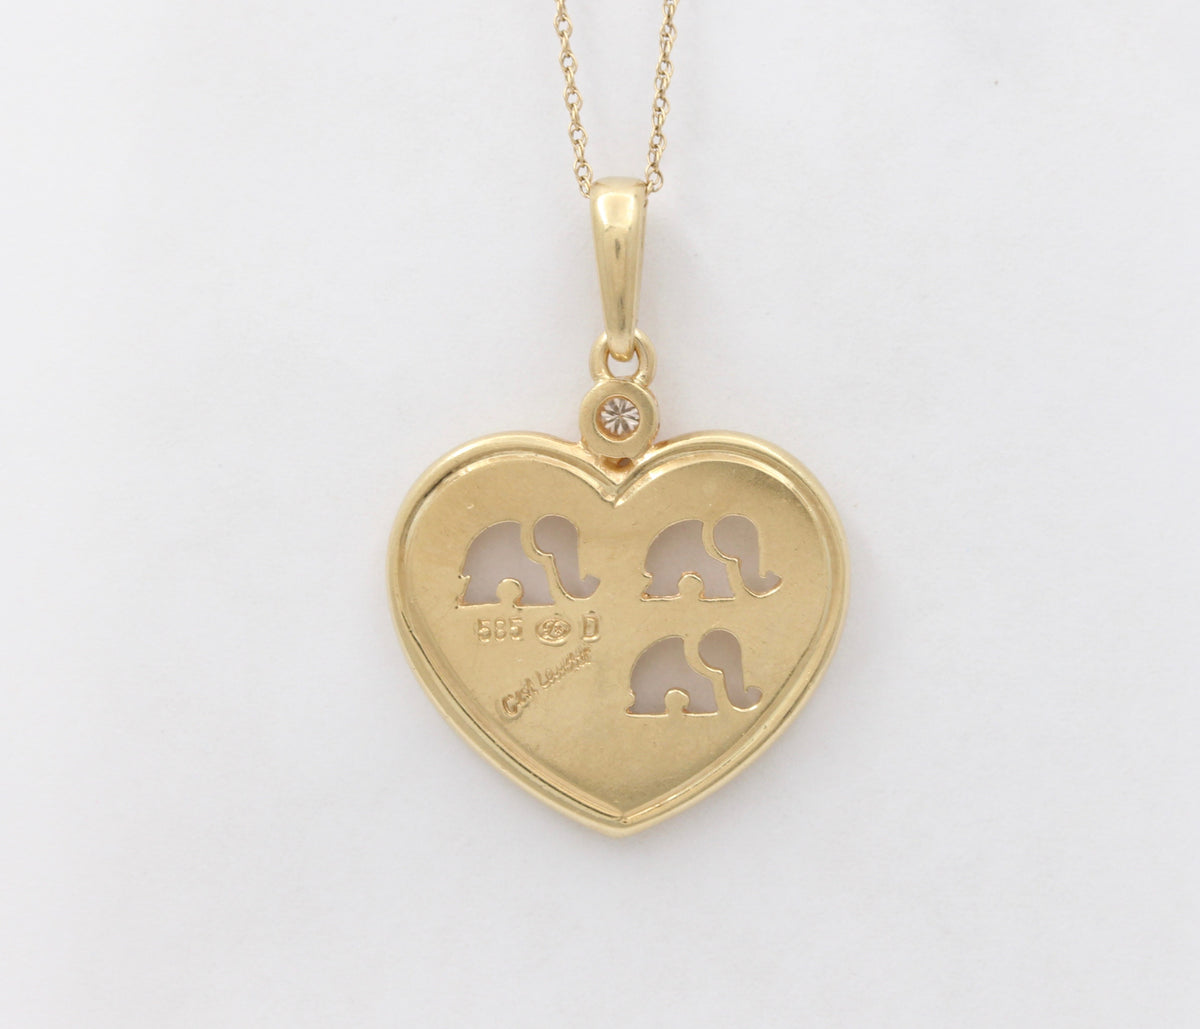 Vintage 14K Gold and Diamond Heart and Elephant Charm, Pendant